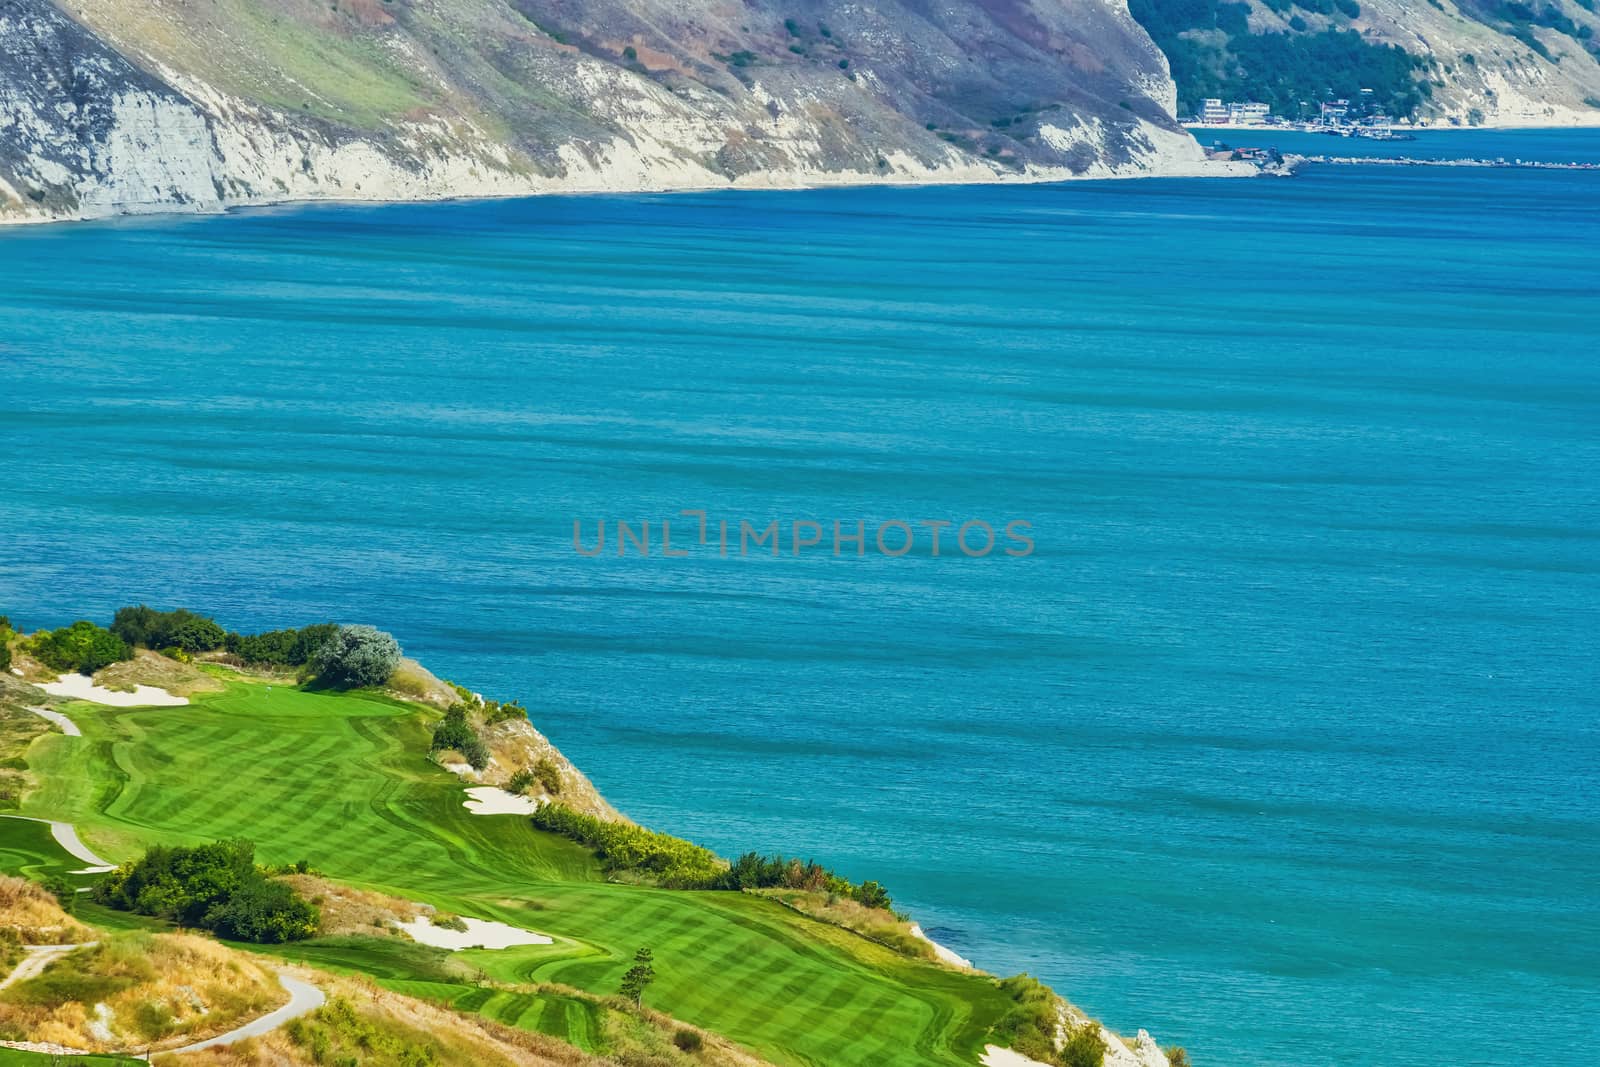 Golf Course on the Sea Shore of Black Sea